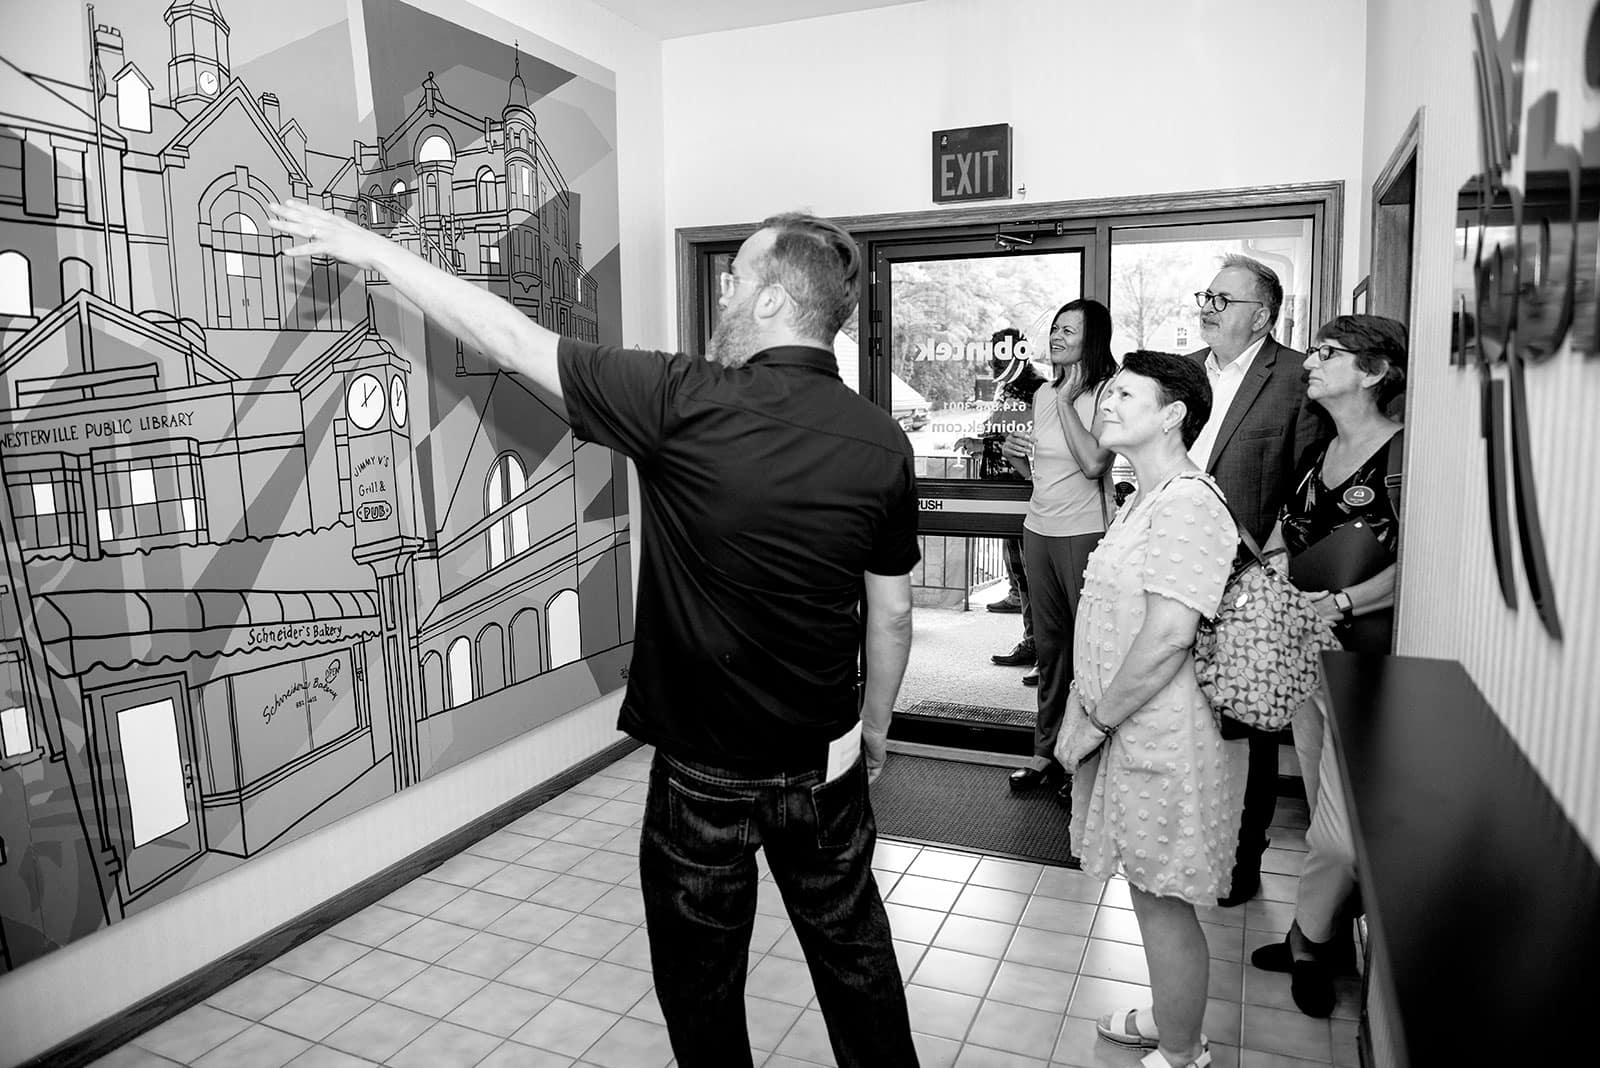 Joe Jorgenson shows the new Adam Hernandez mural to visitors during the Robintek open house